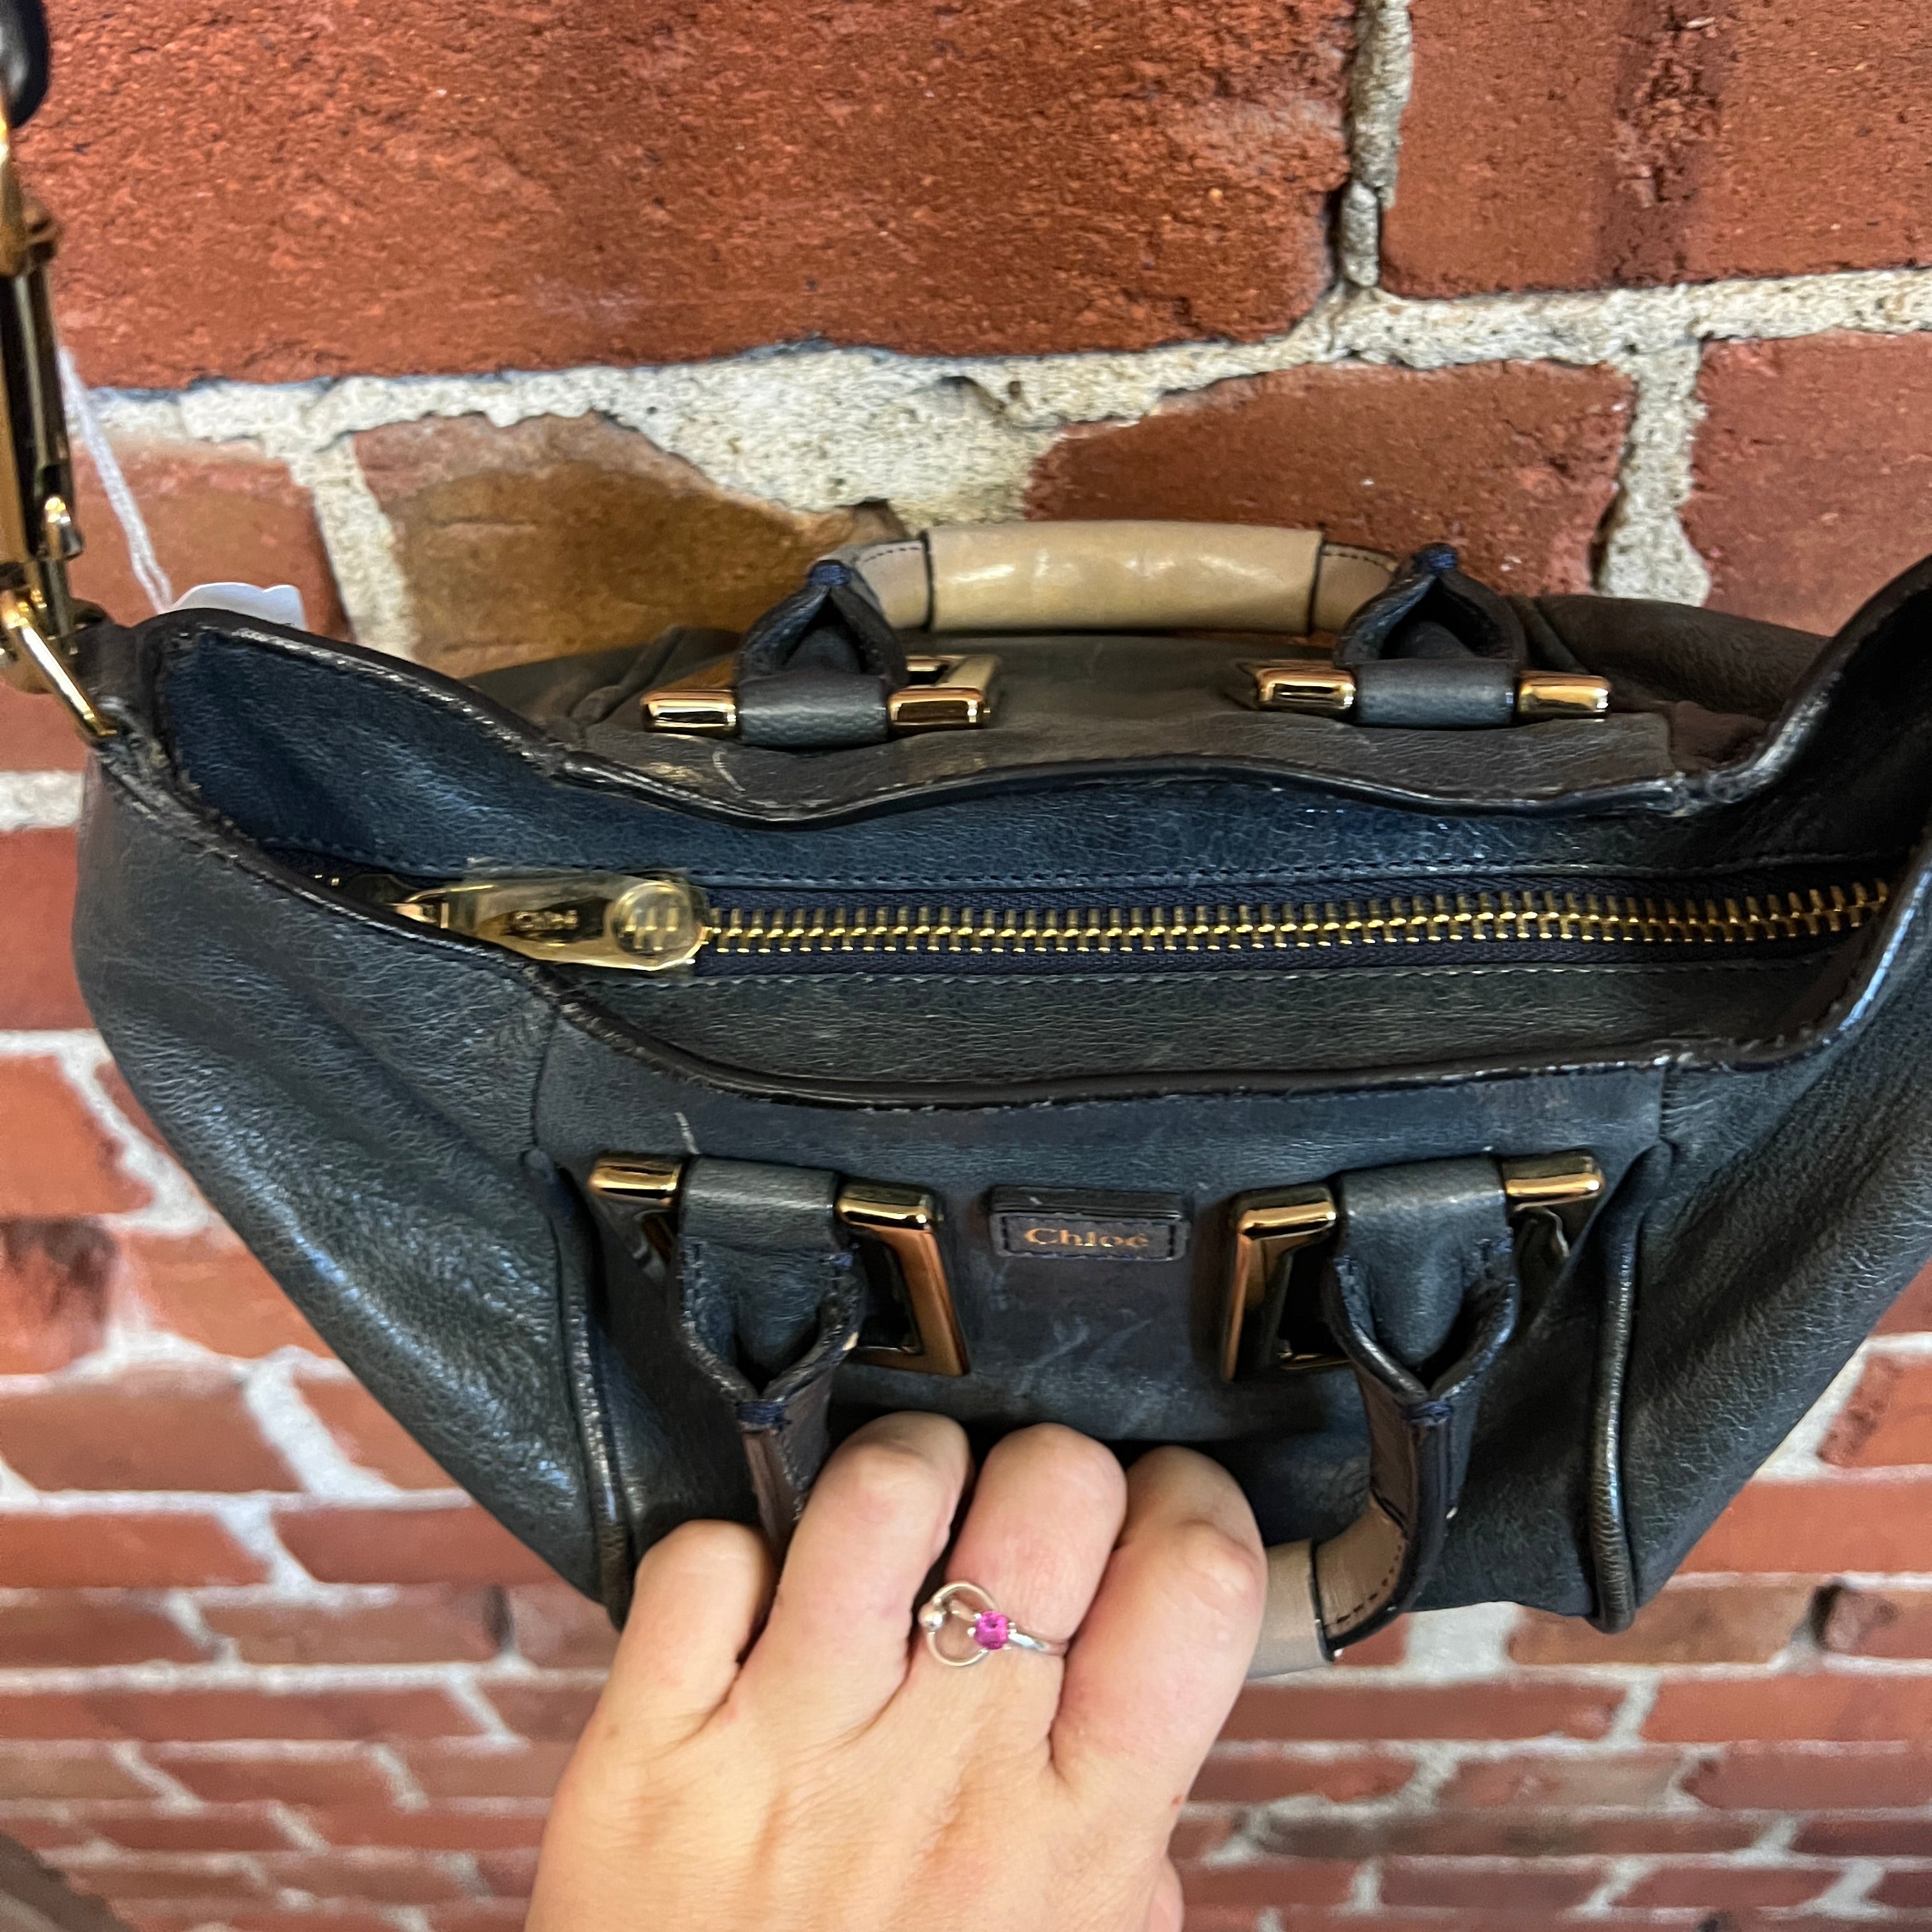 CHLOE mini leather handbag